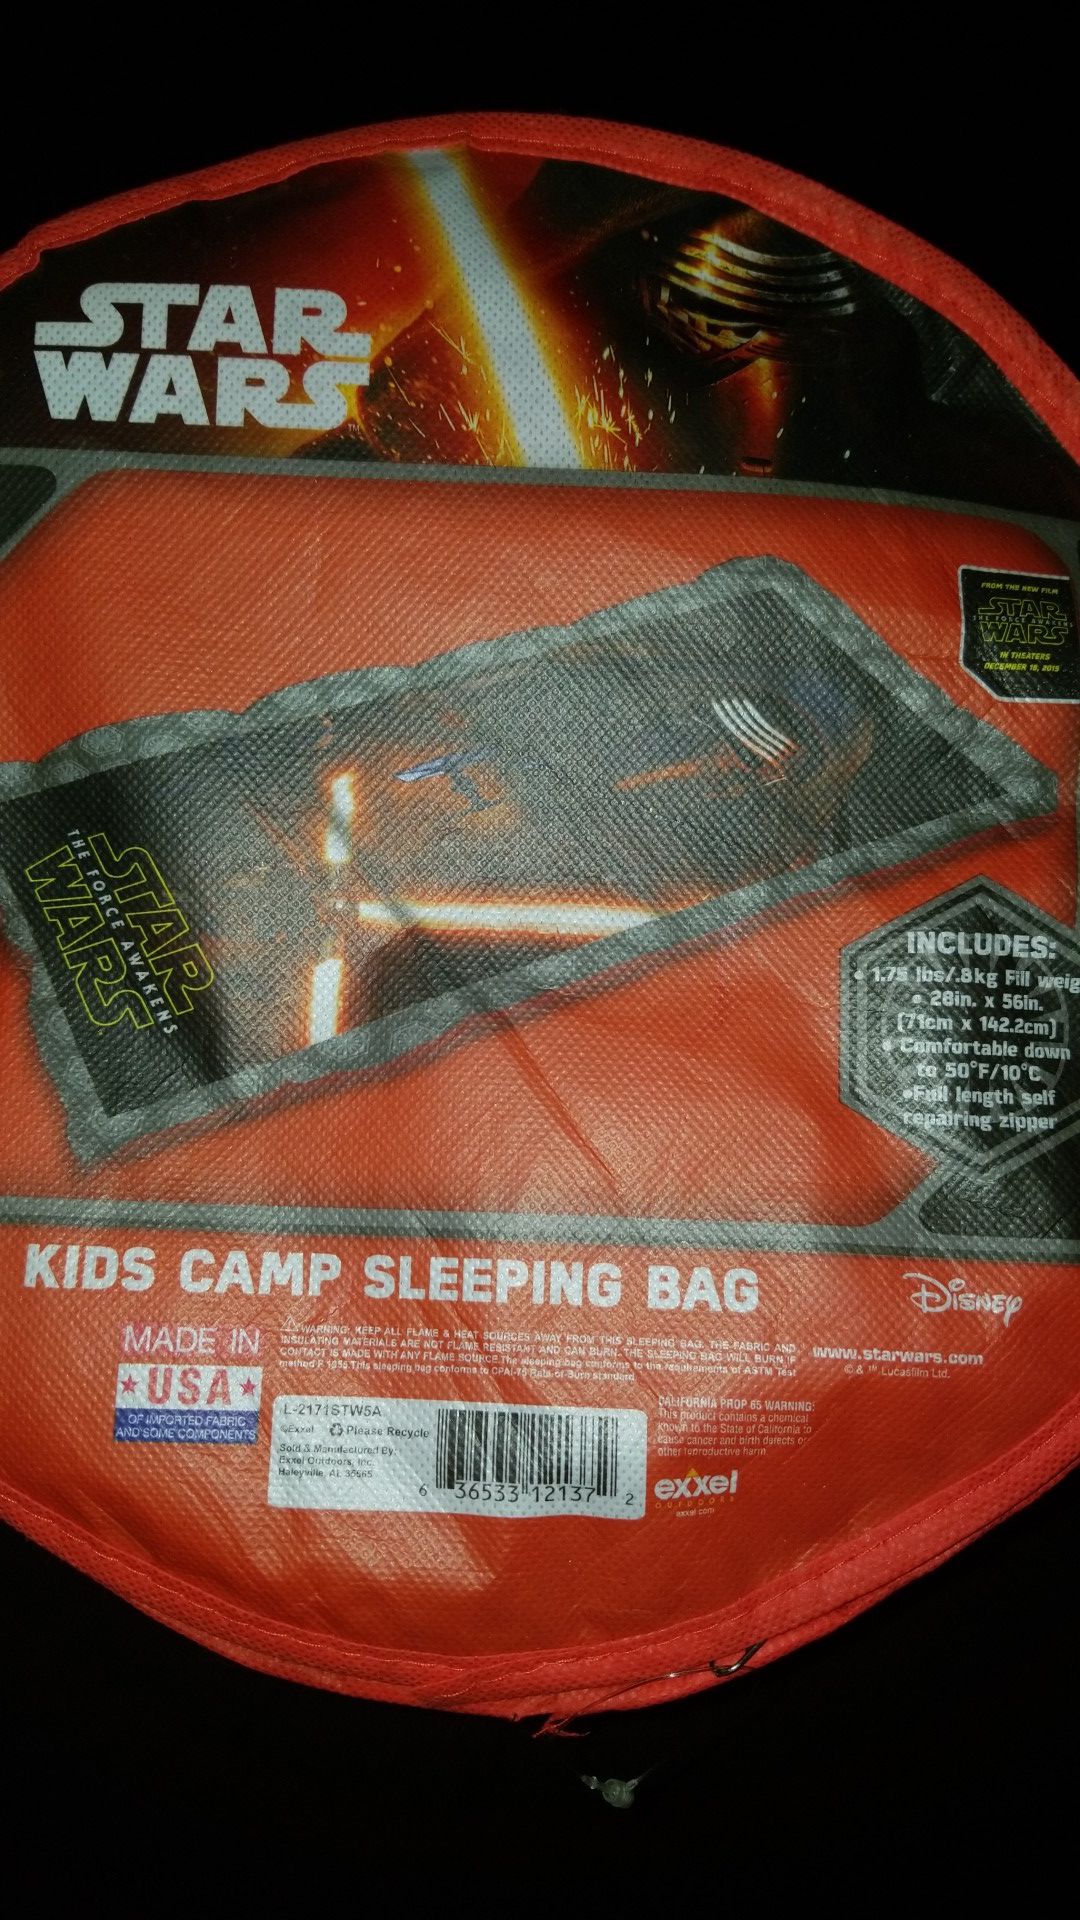 Star Wars kids camp sleeping bag